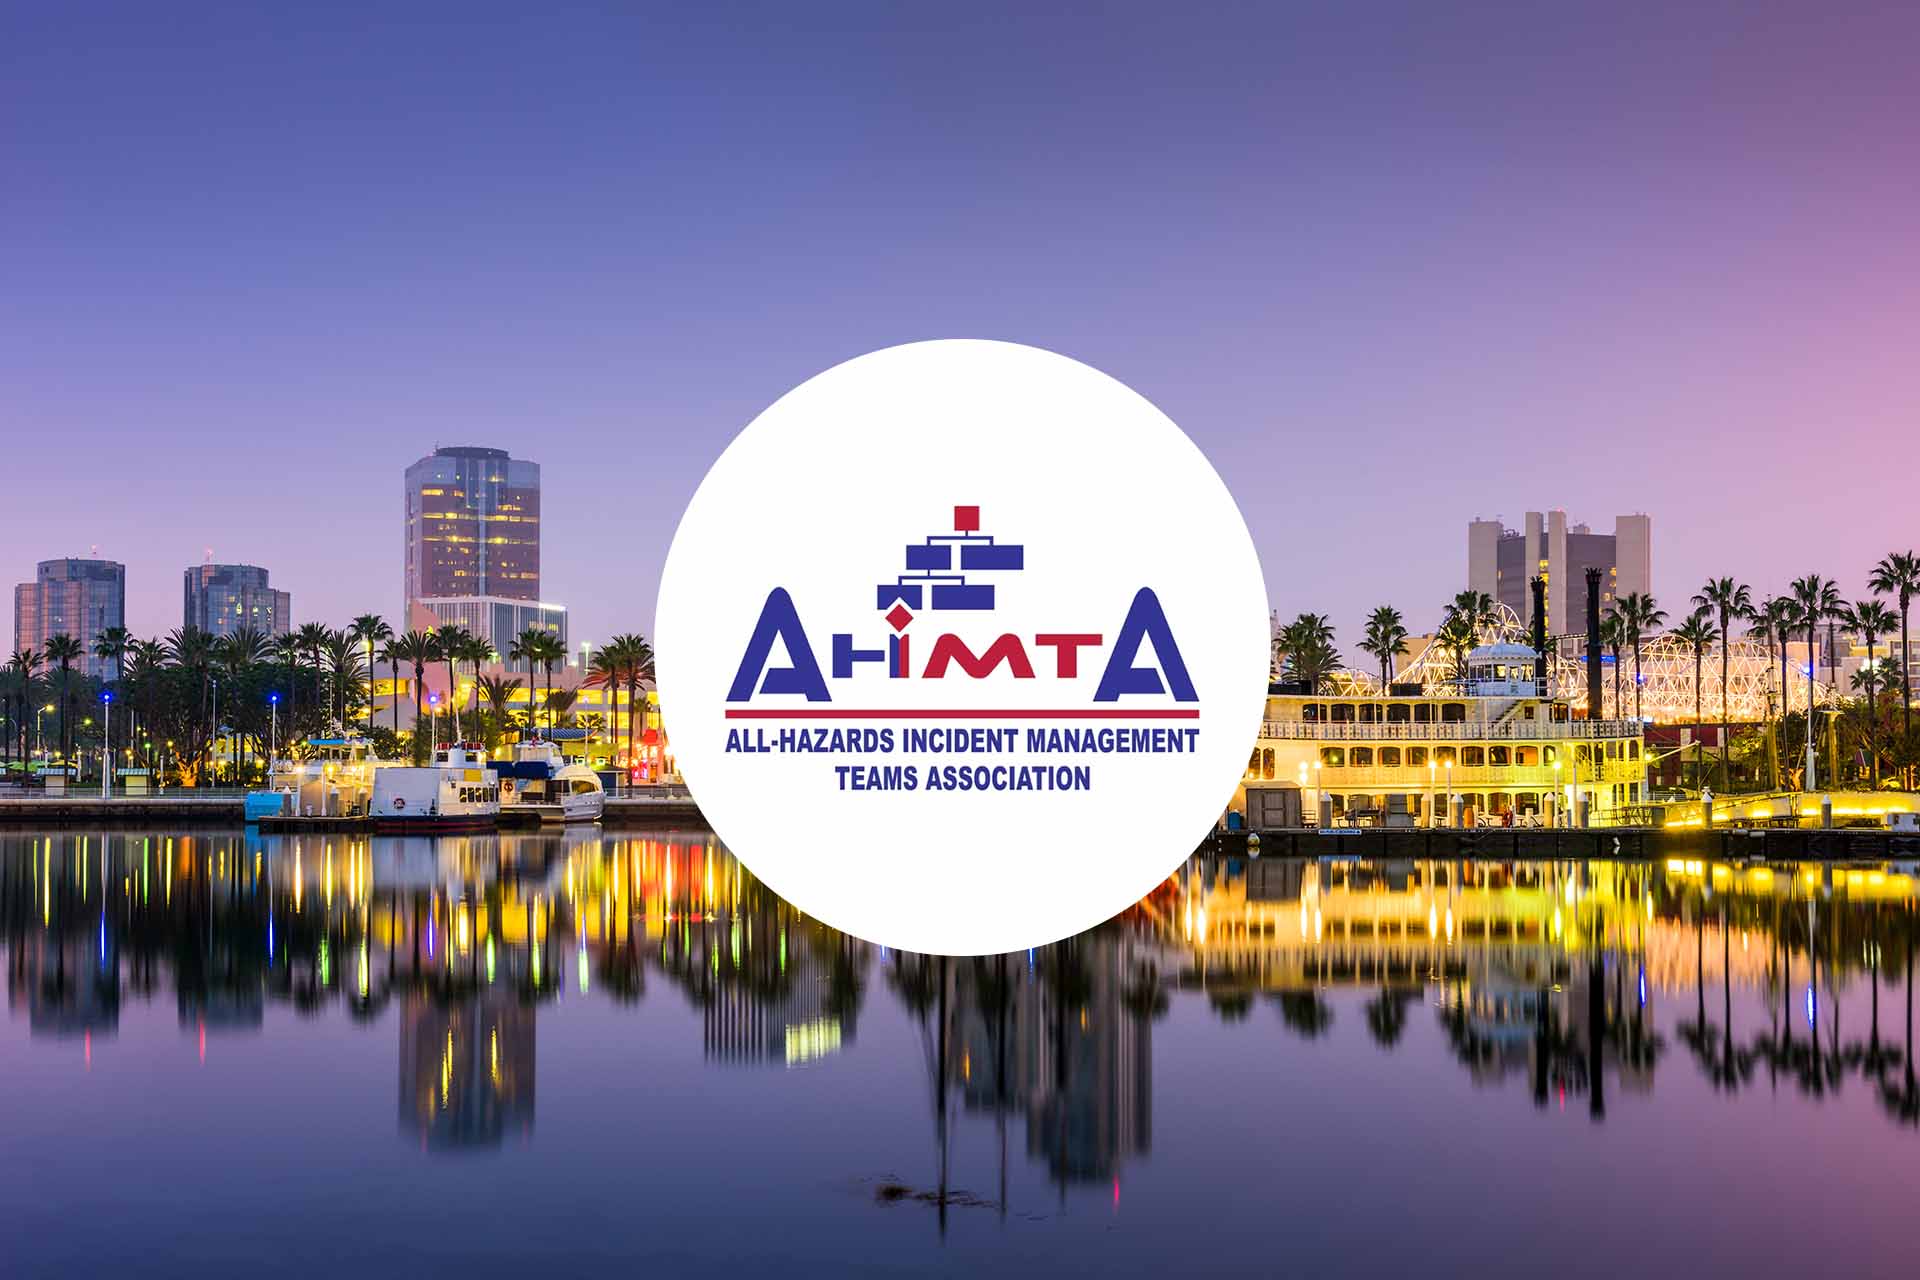 All-Hazards Incident Management Team Association (AHIMTA) Training & Education Symposium